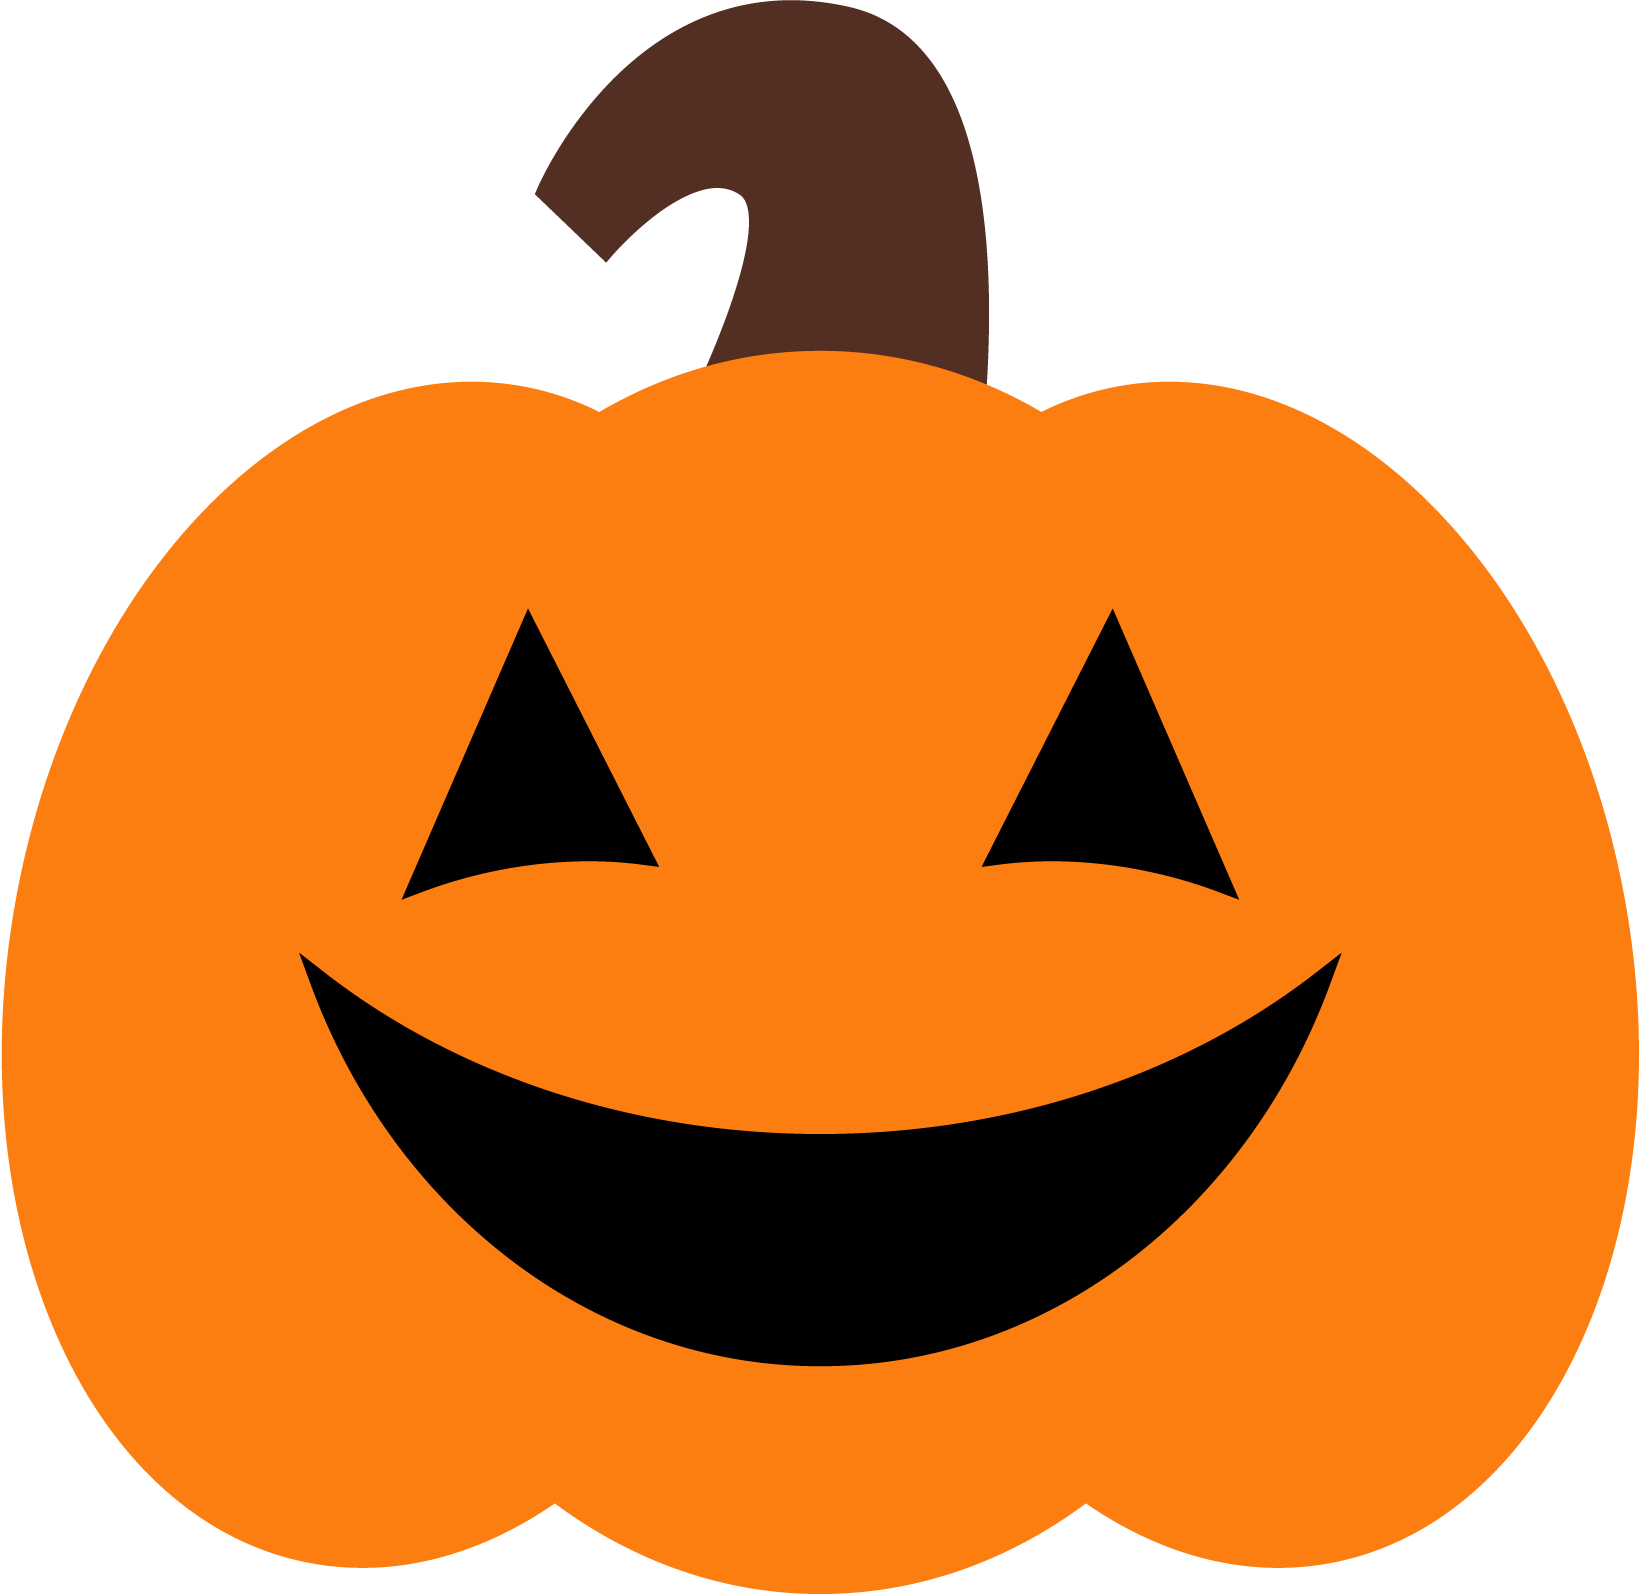 Pumpkin Jack O Lantern clip art (free clipart) | revidevi.